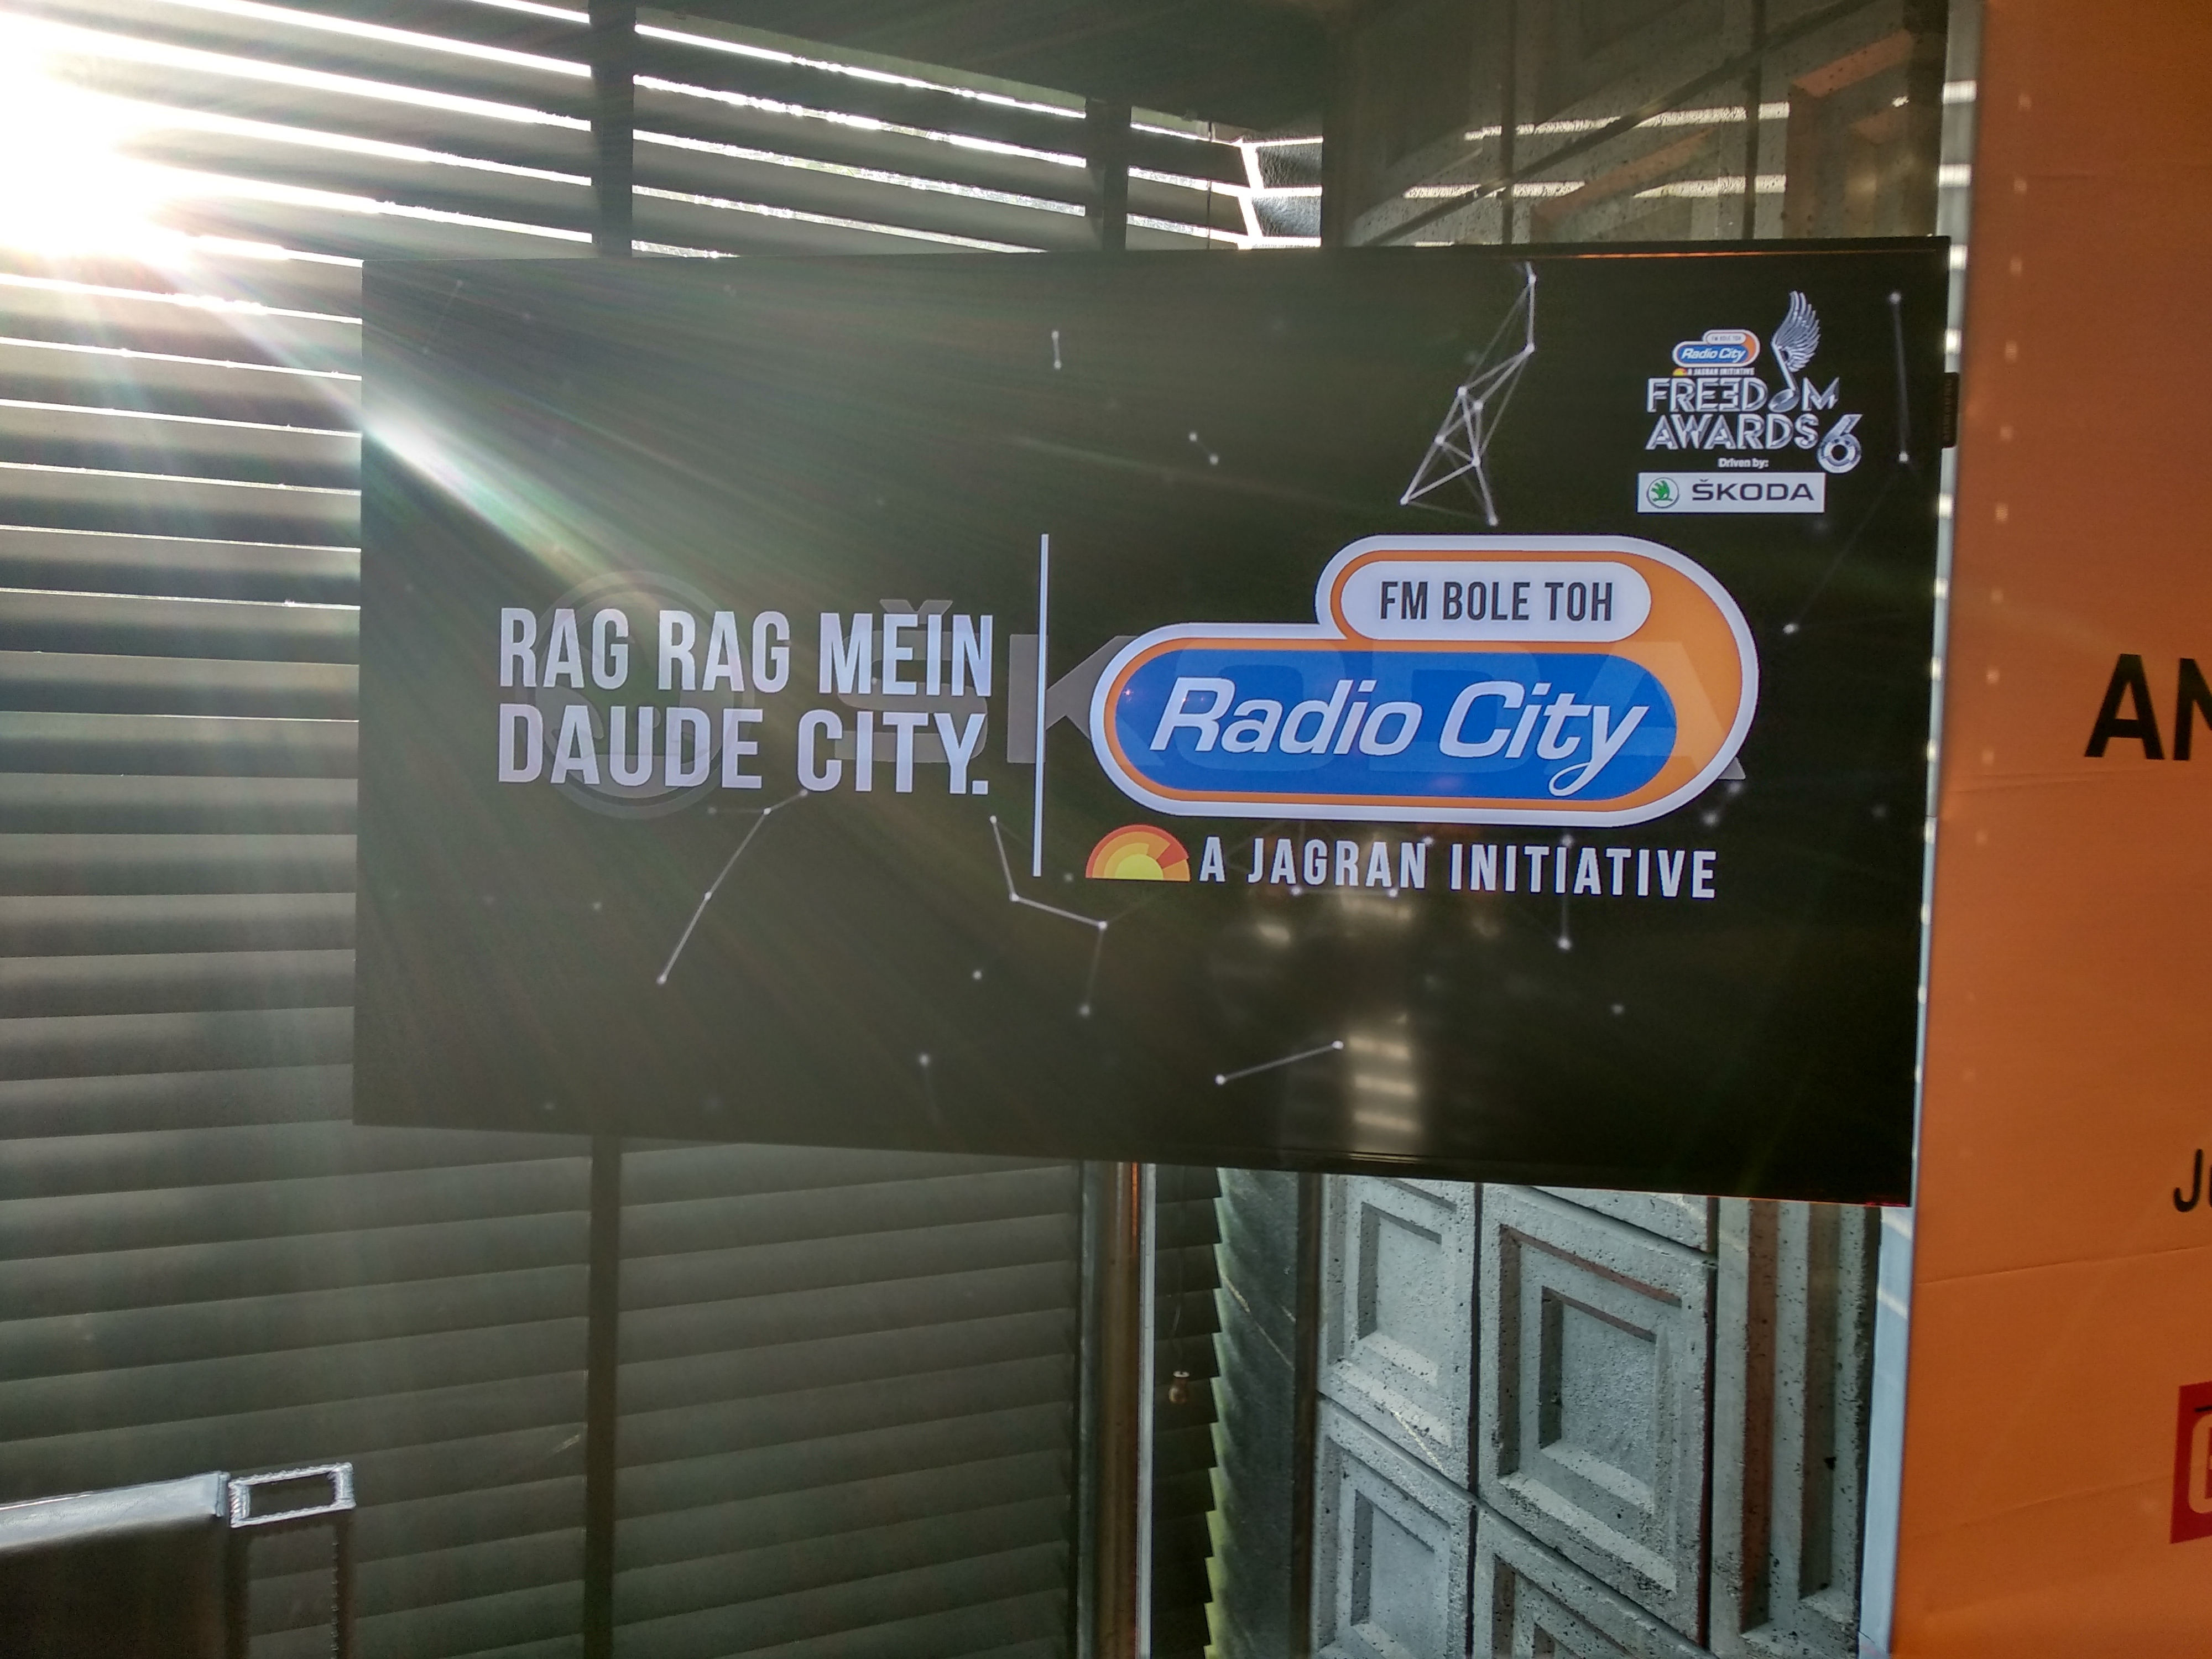 Radio City Freedom Awards Skoda India Innovation